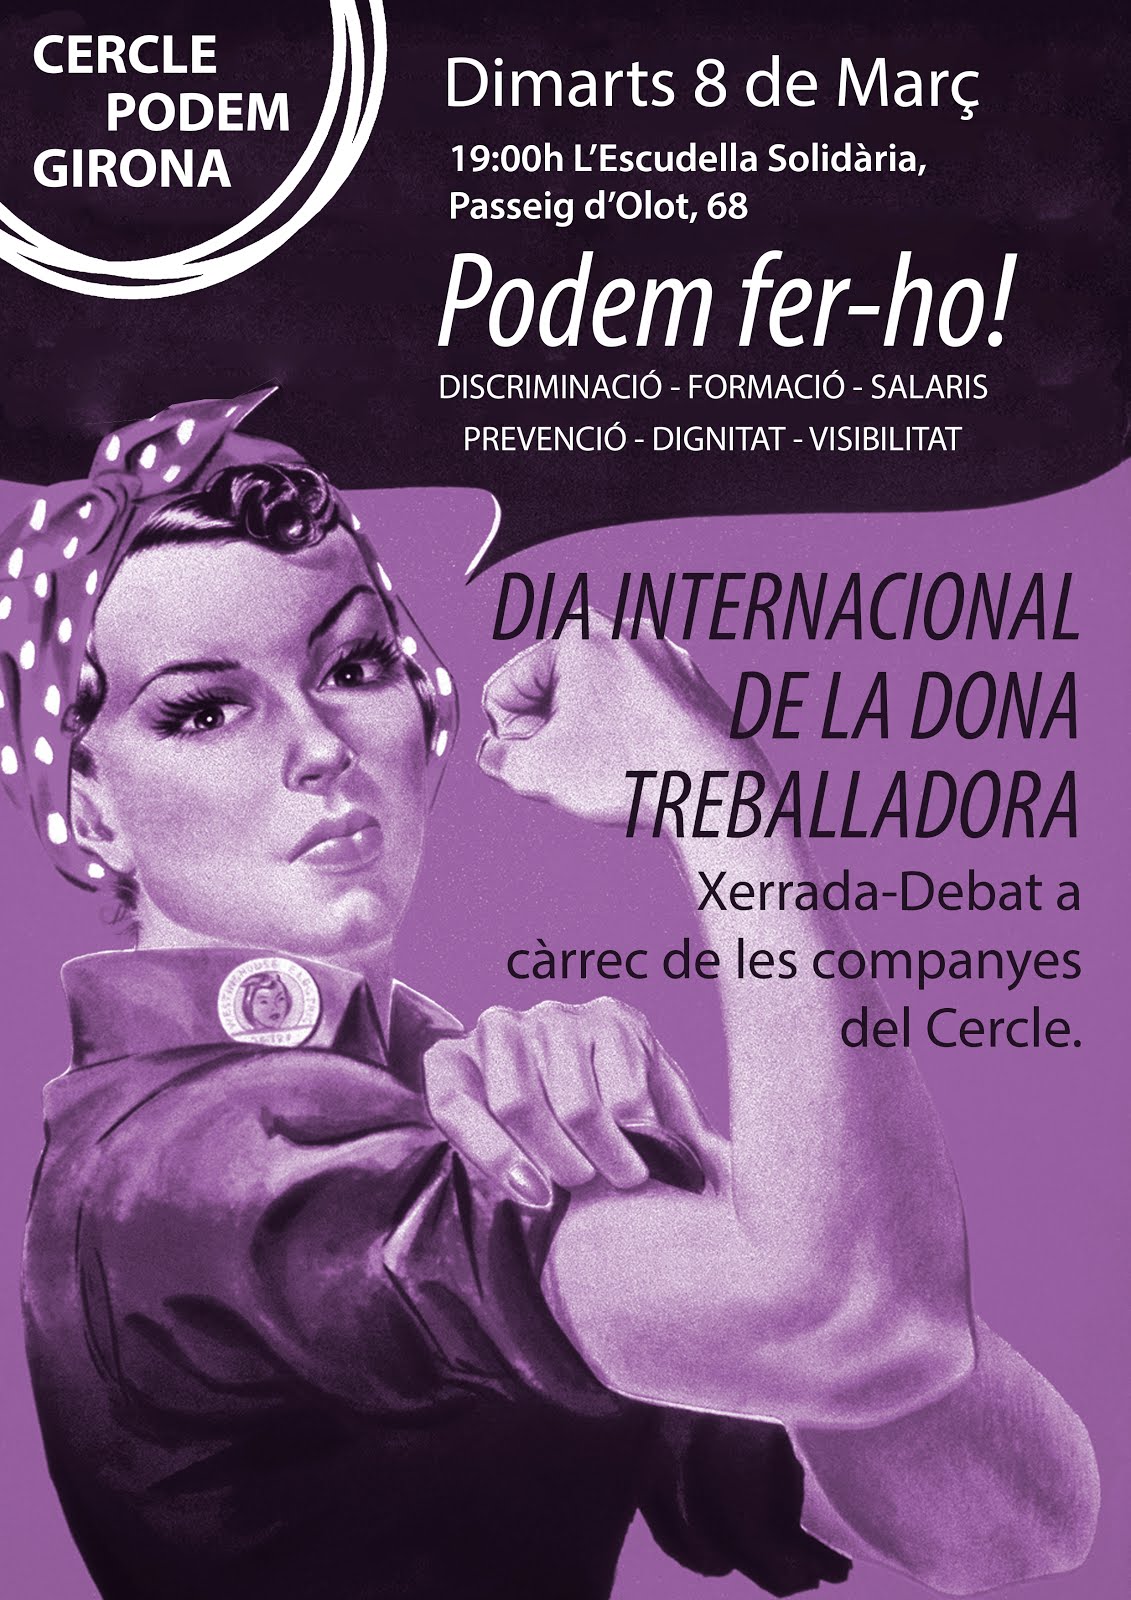 8 de març dia internacional de la dona treballadora